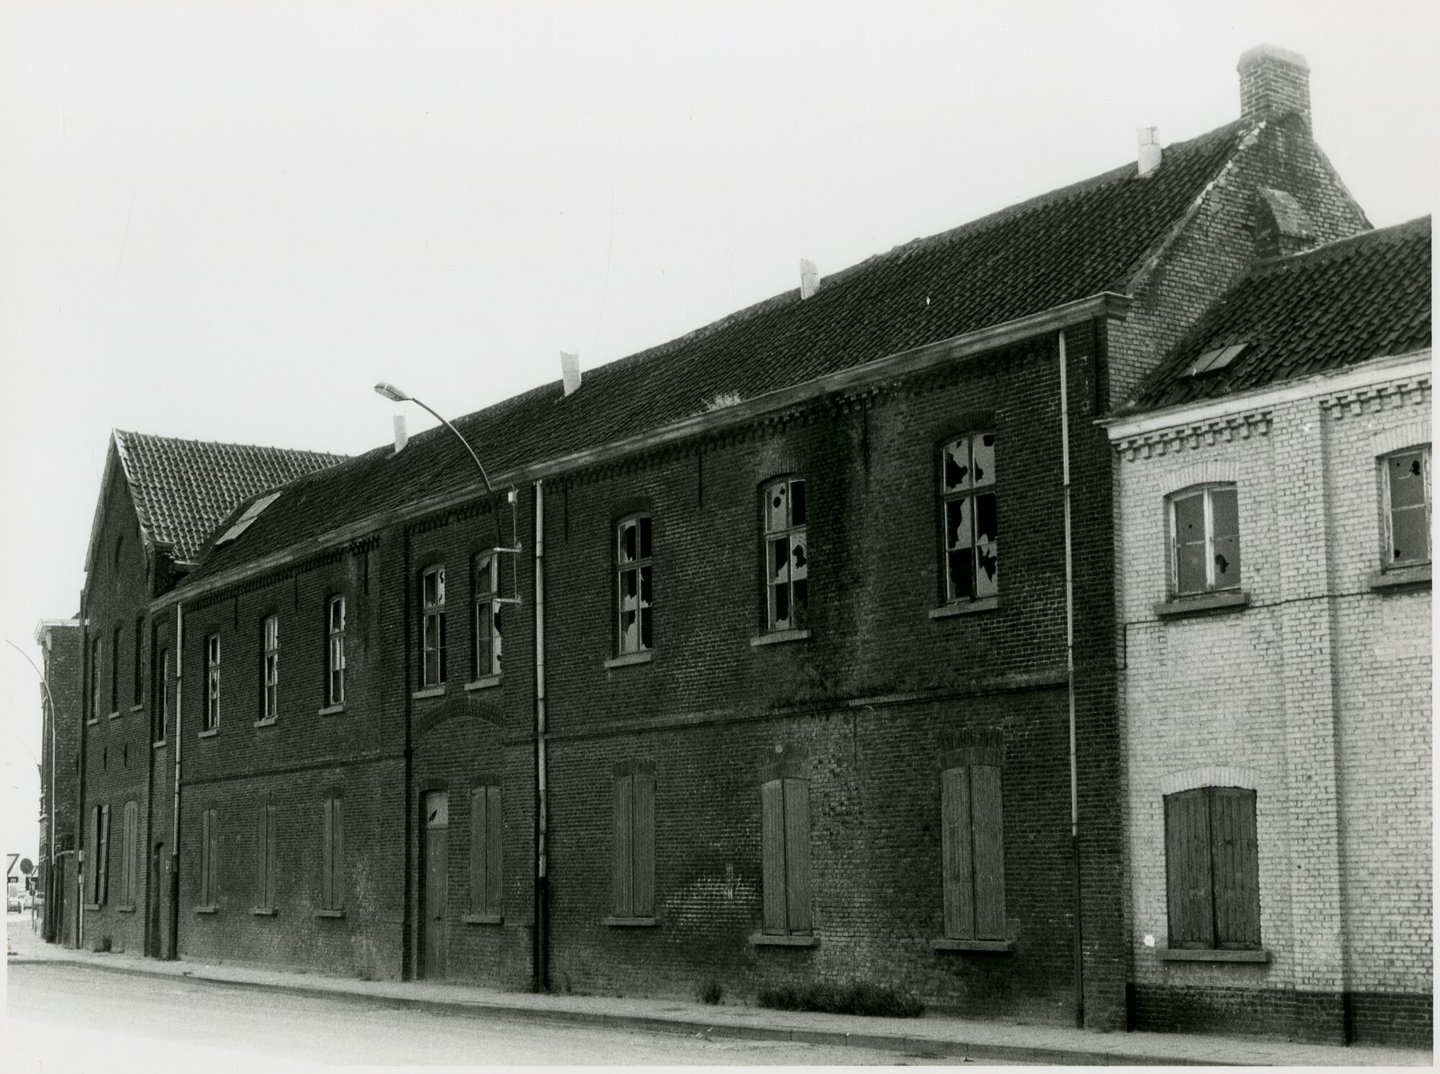 Buitenzicht van textielfabriek Linière Saint-Sauveur in Gent